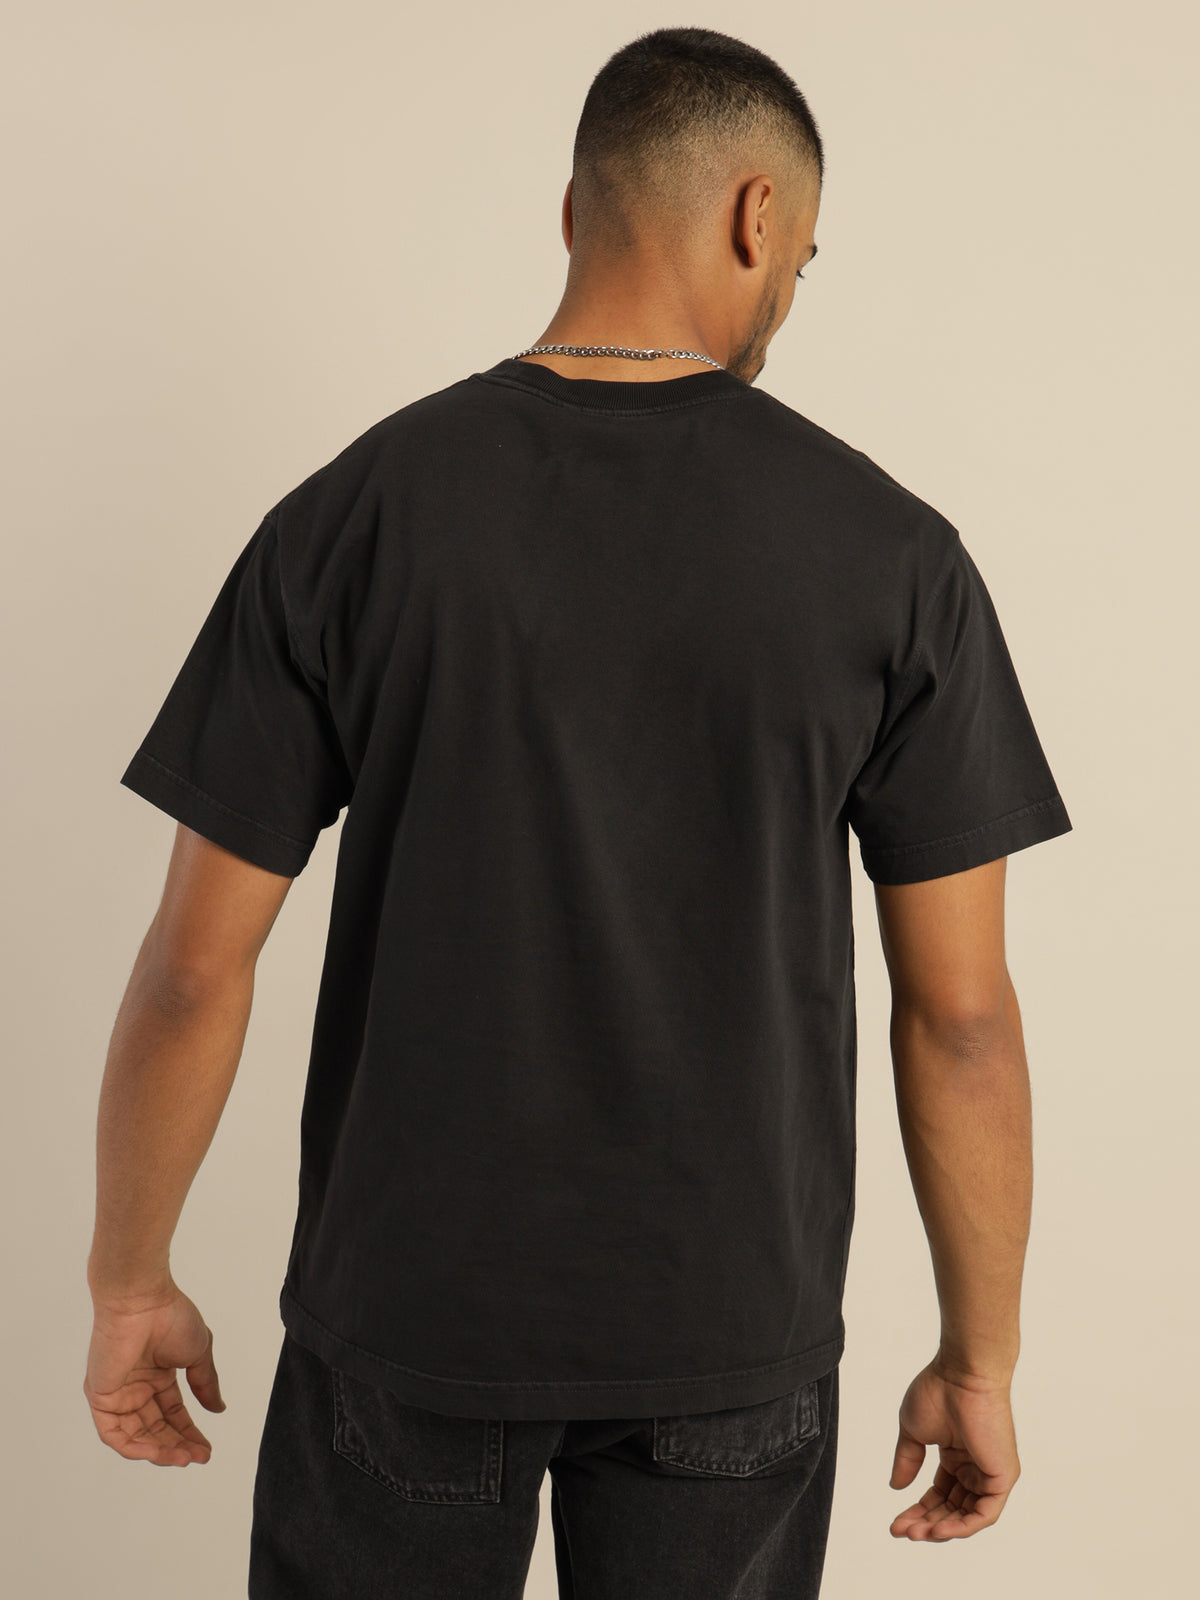 Short Sleeve Vista T-Shirt in Charcoal Grey